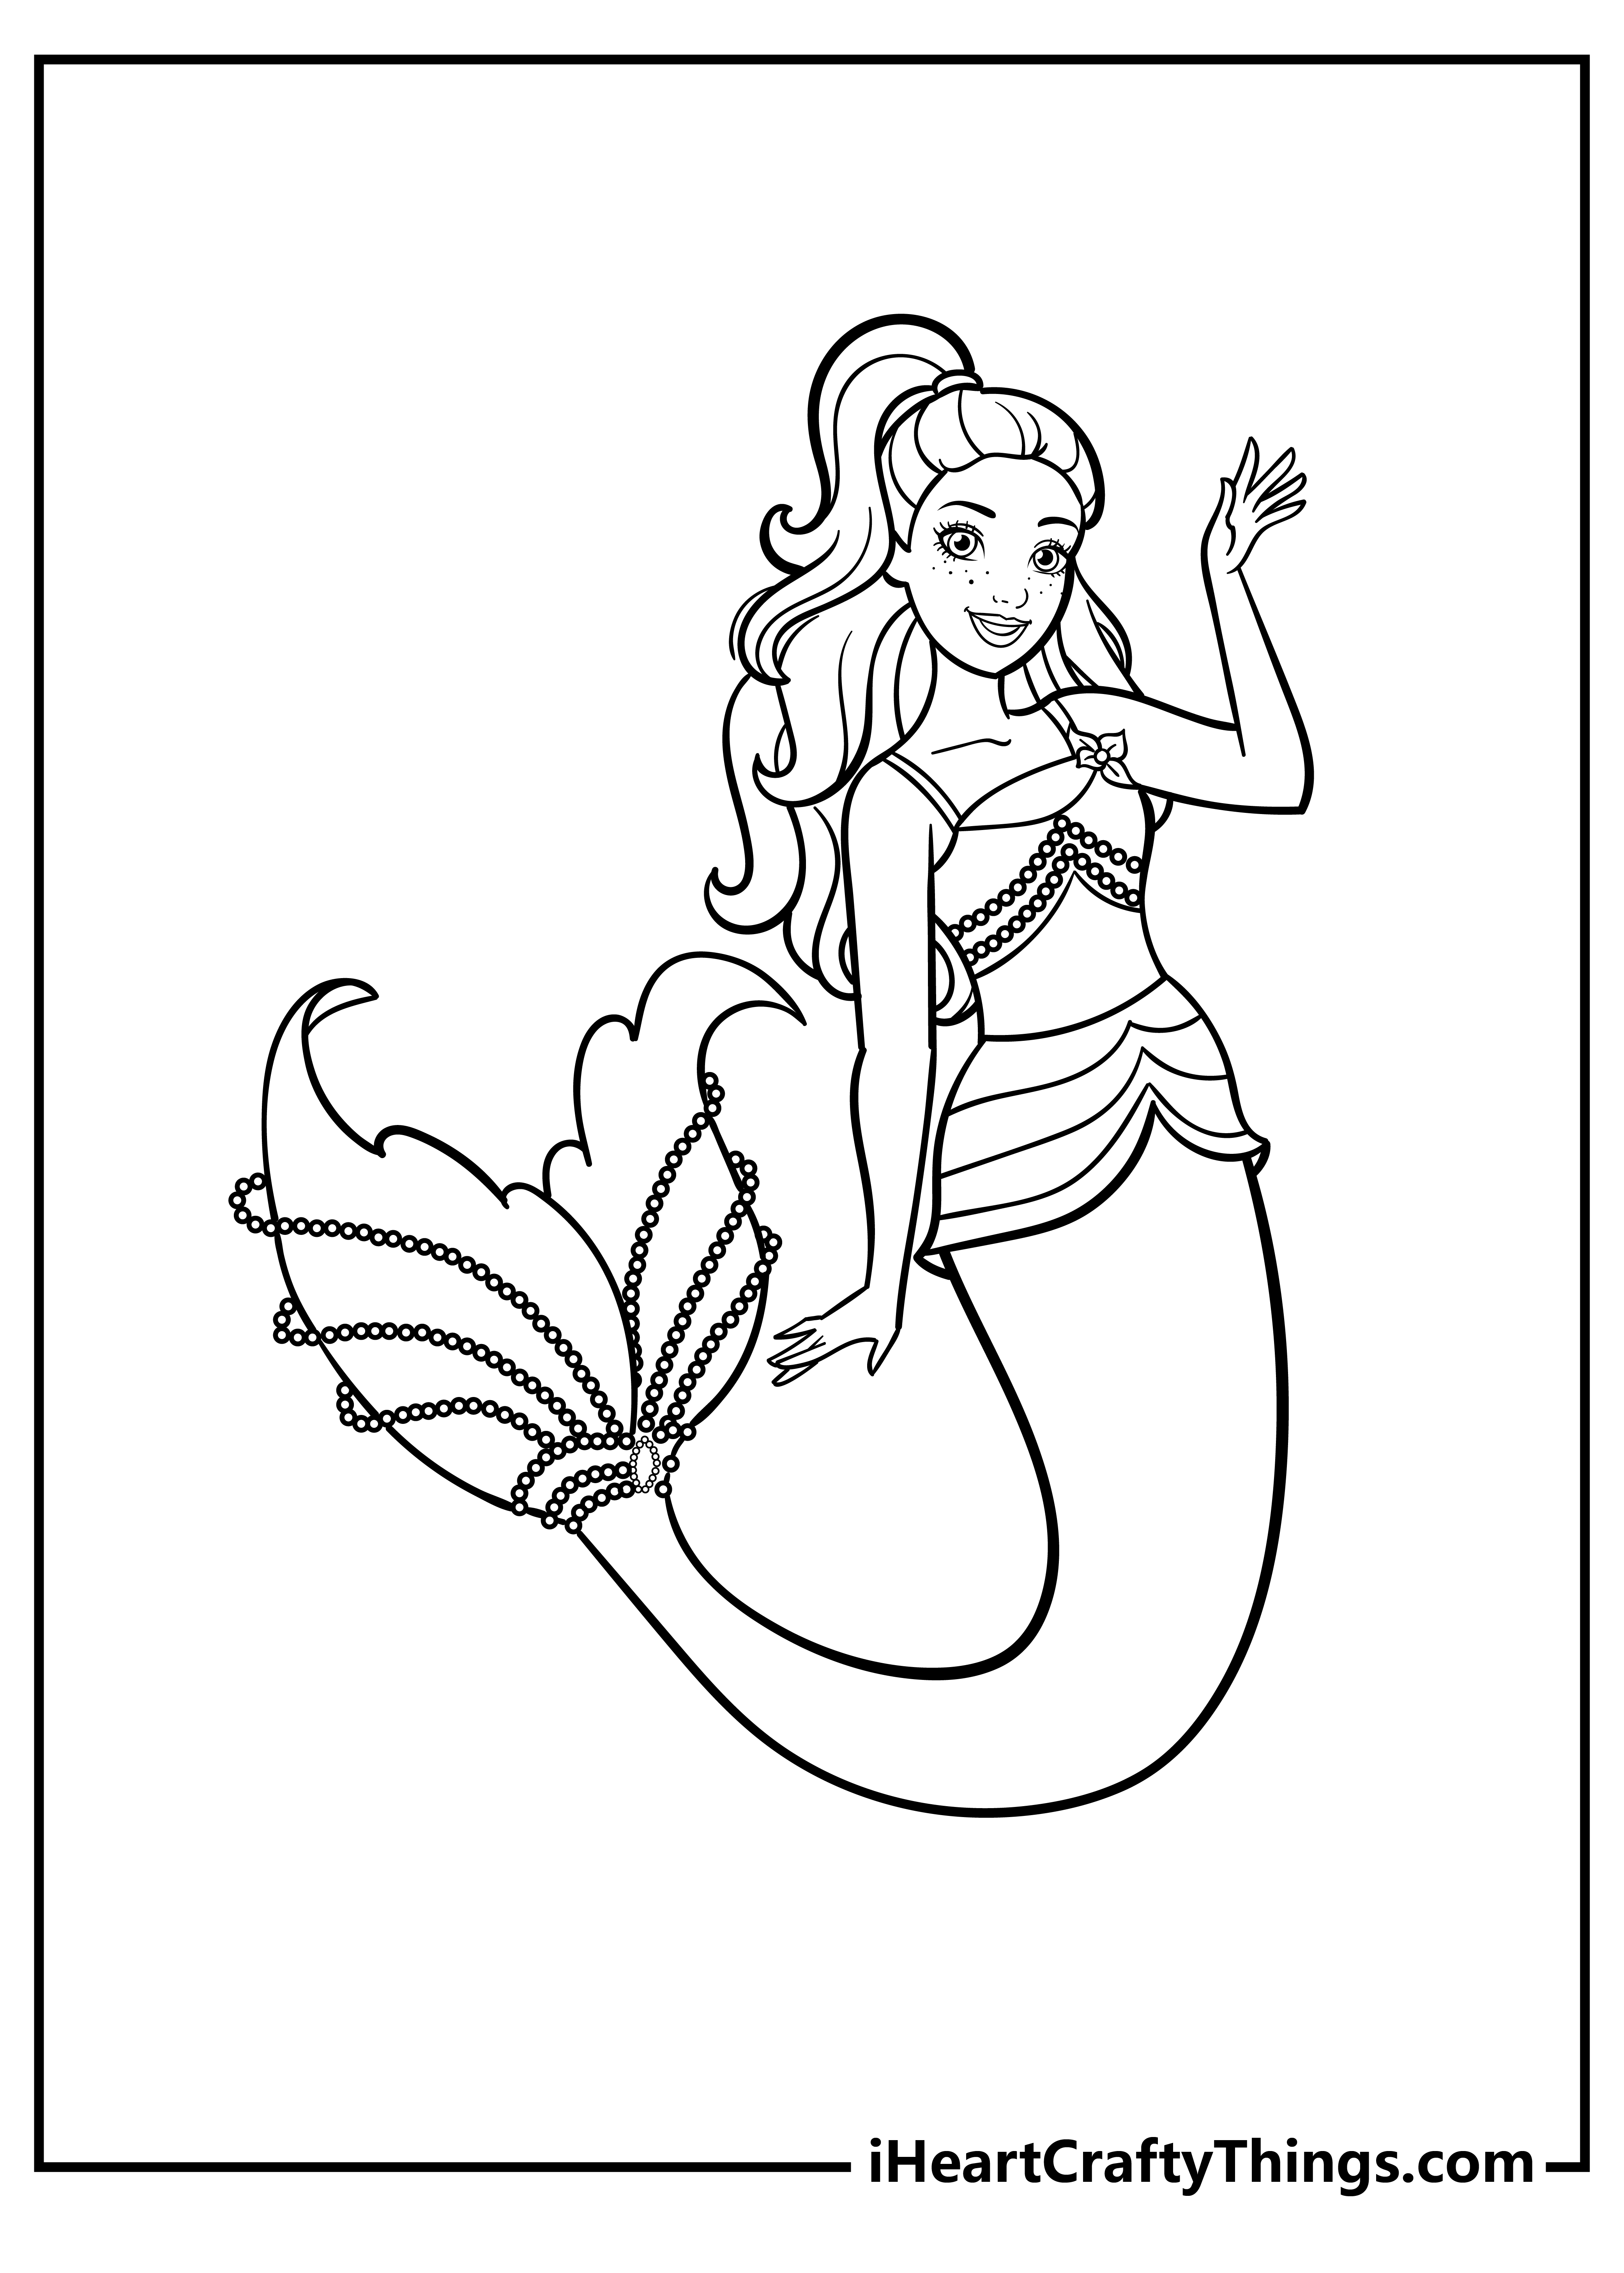 Barbie Mermaid Coloring Pages free pdf download